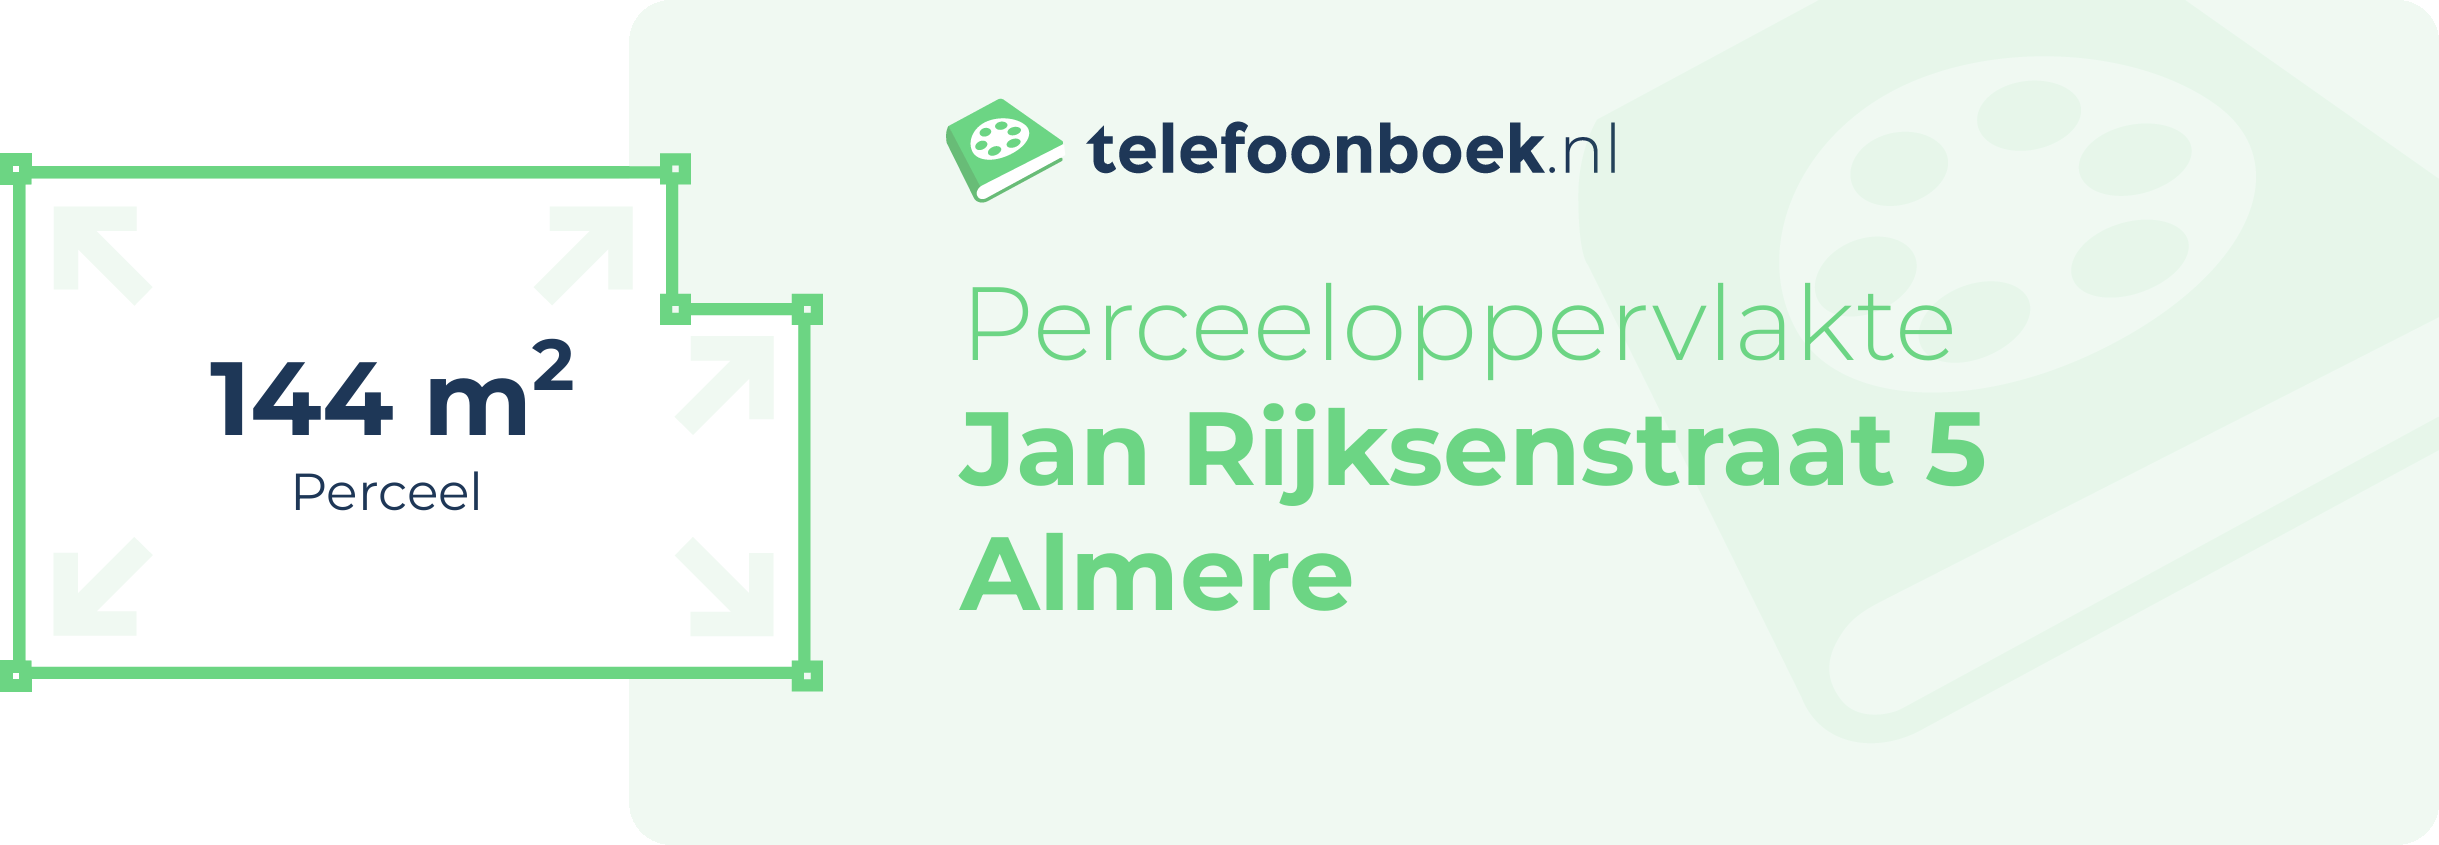 Perceeloppervlakte Jan Rijksenstraat 5 Almere